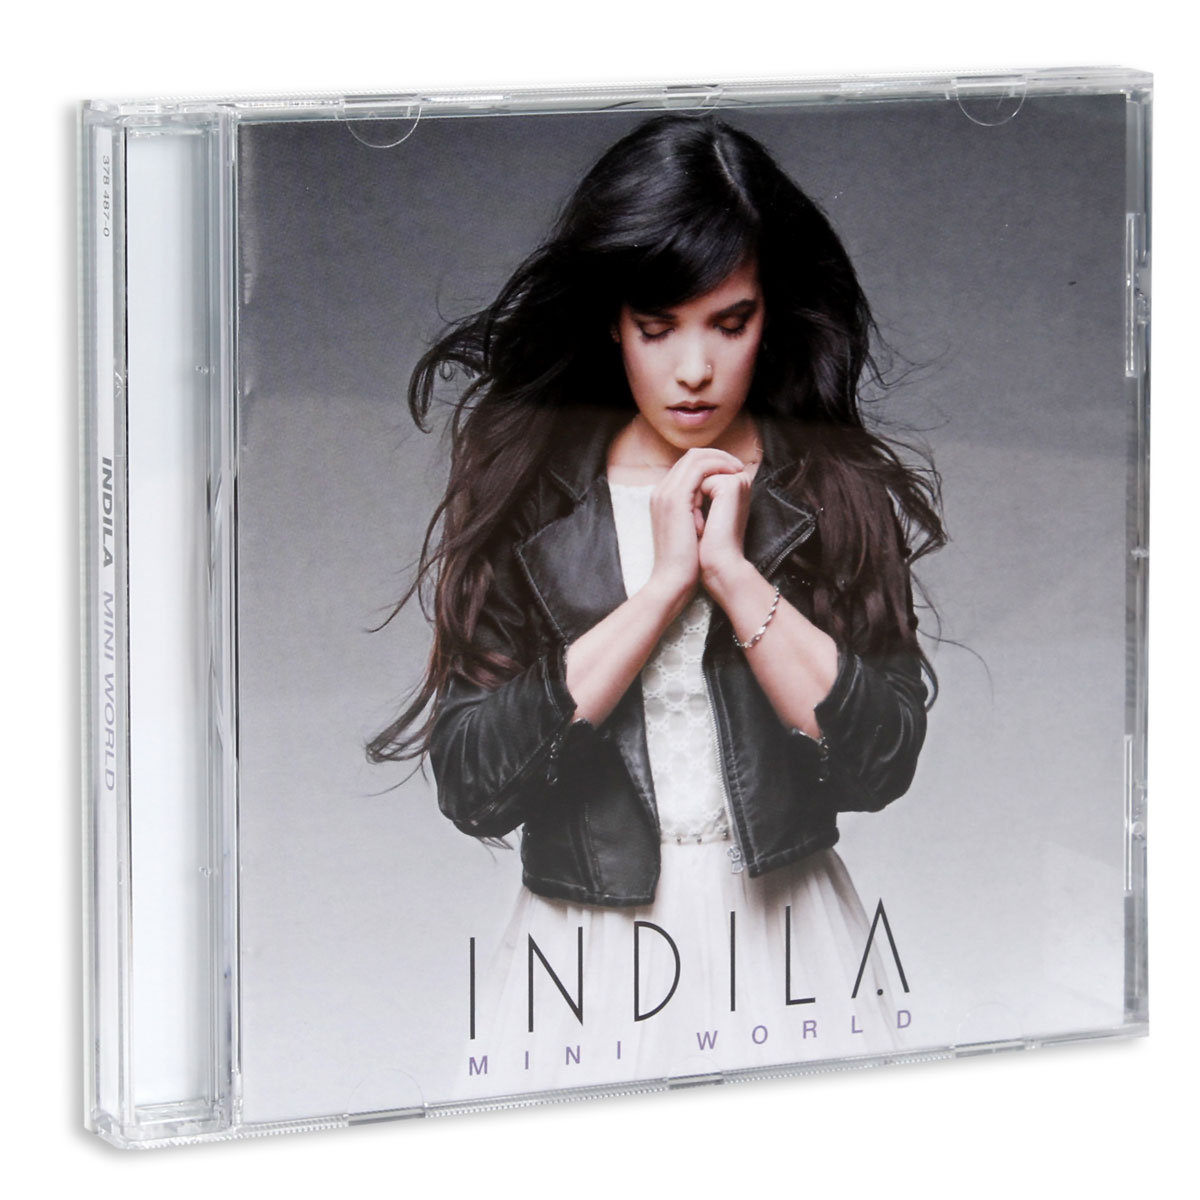 Indila mini world lyrics